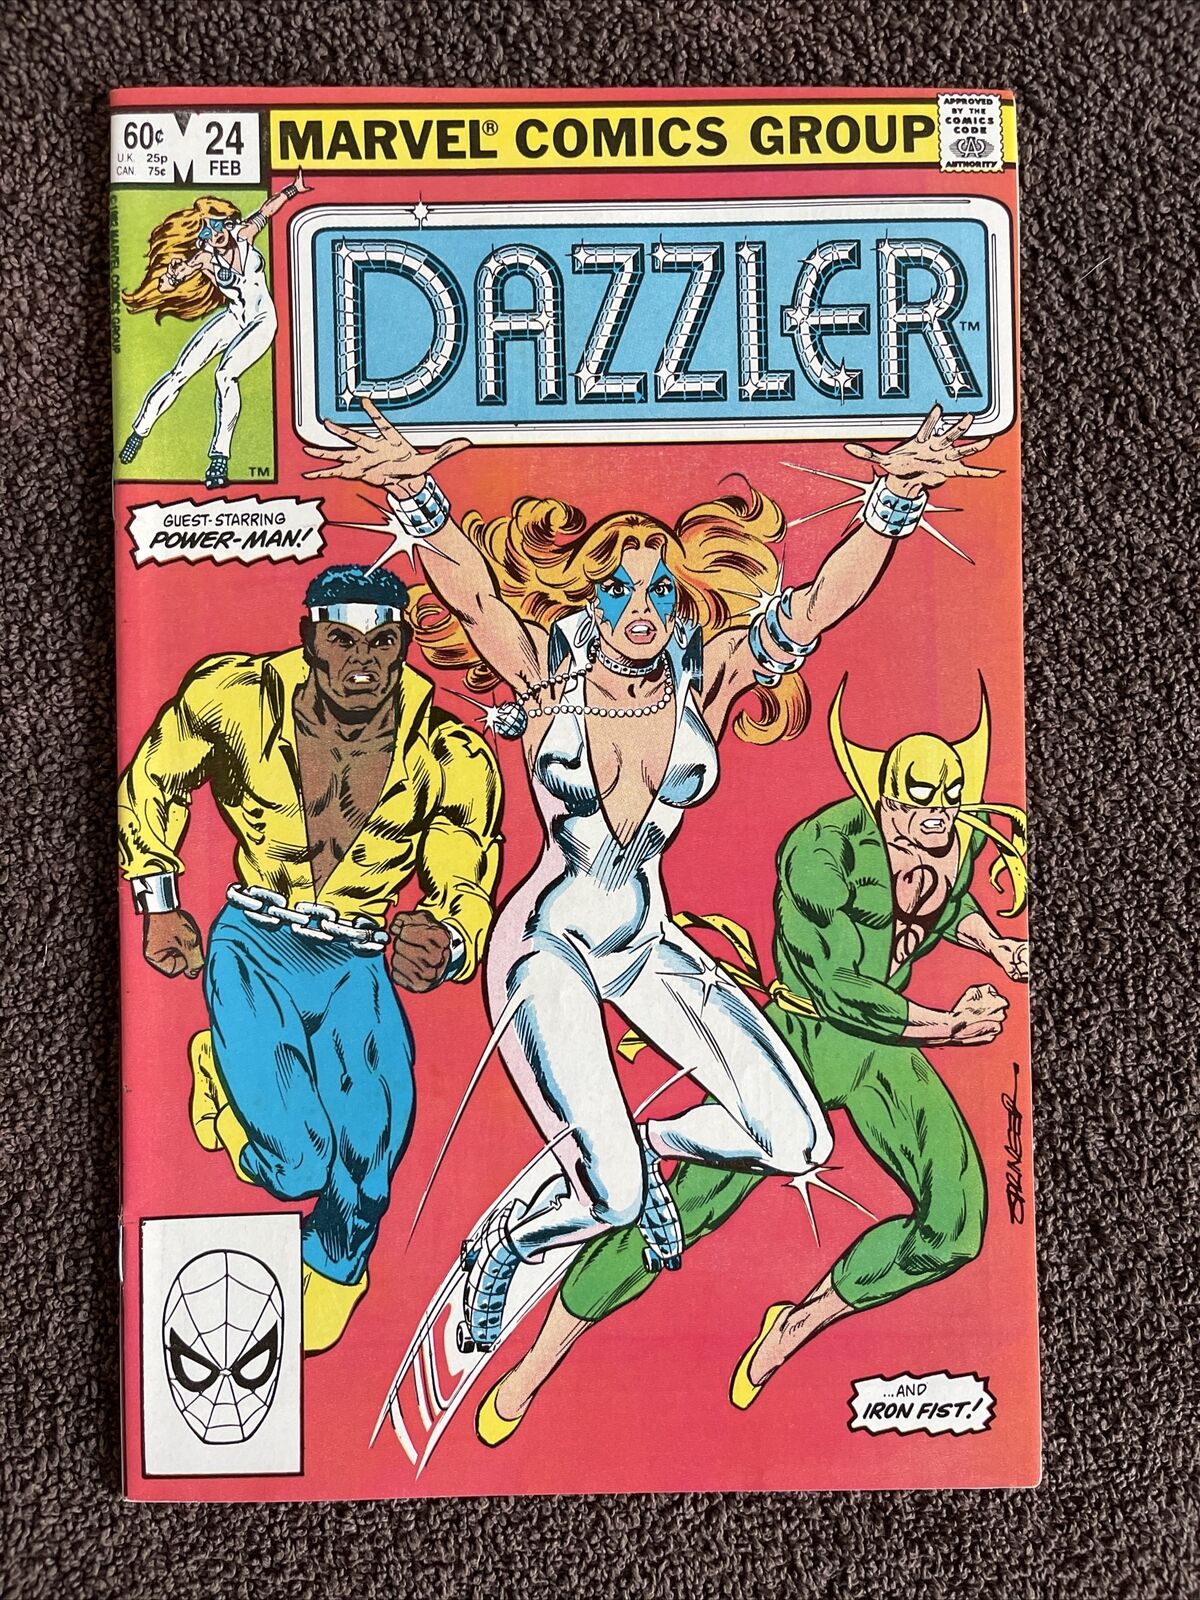 DAZZLER #24 (Marvel, 1983) Power Man & Iron Fist vs Rogue